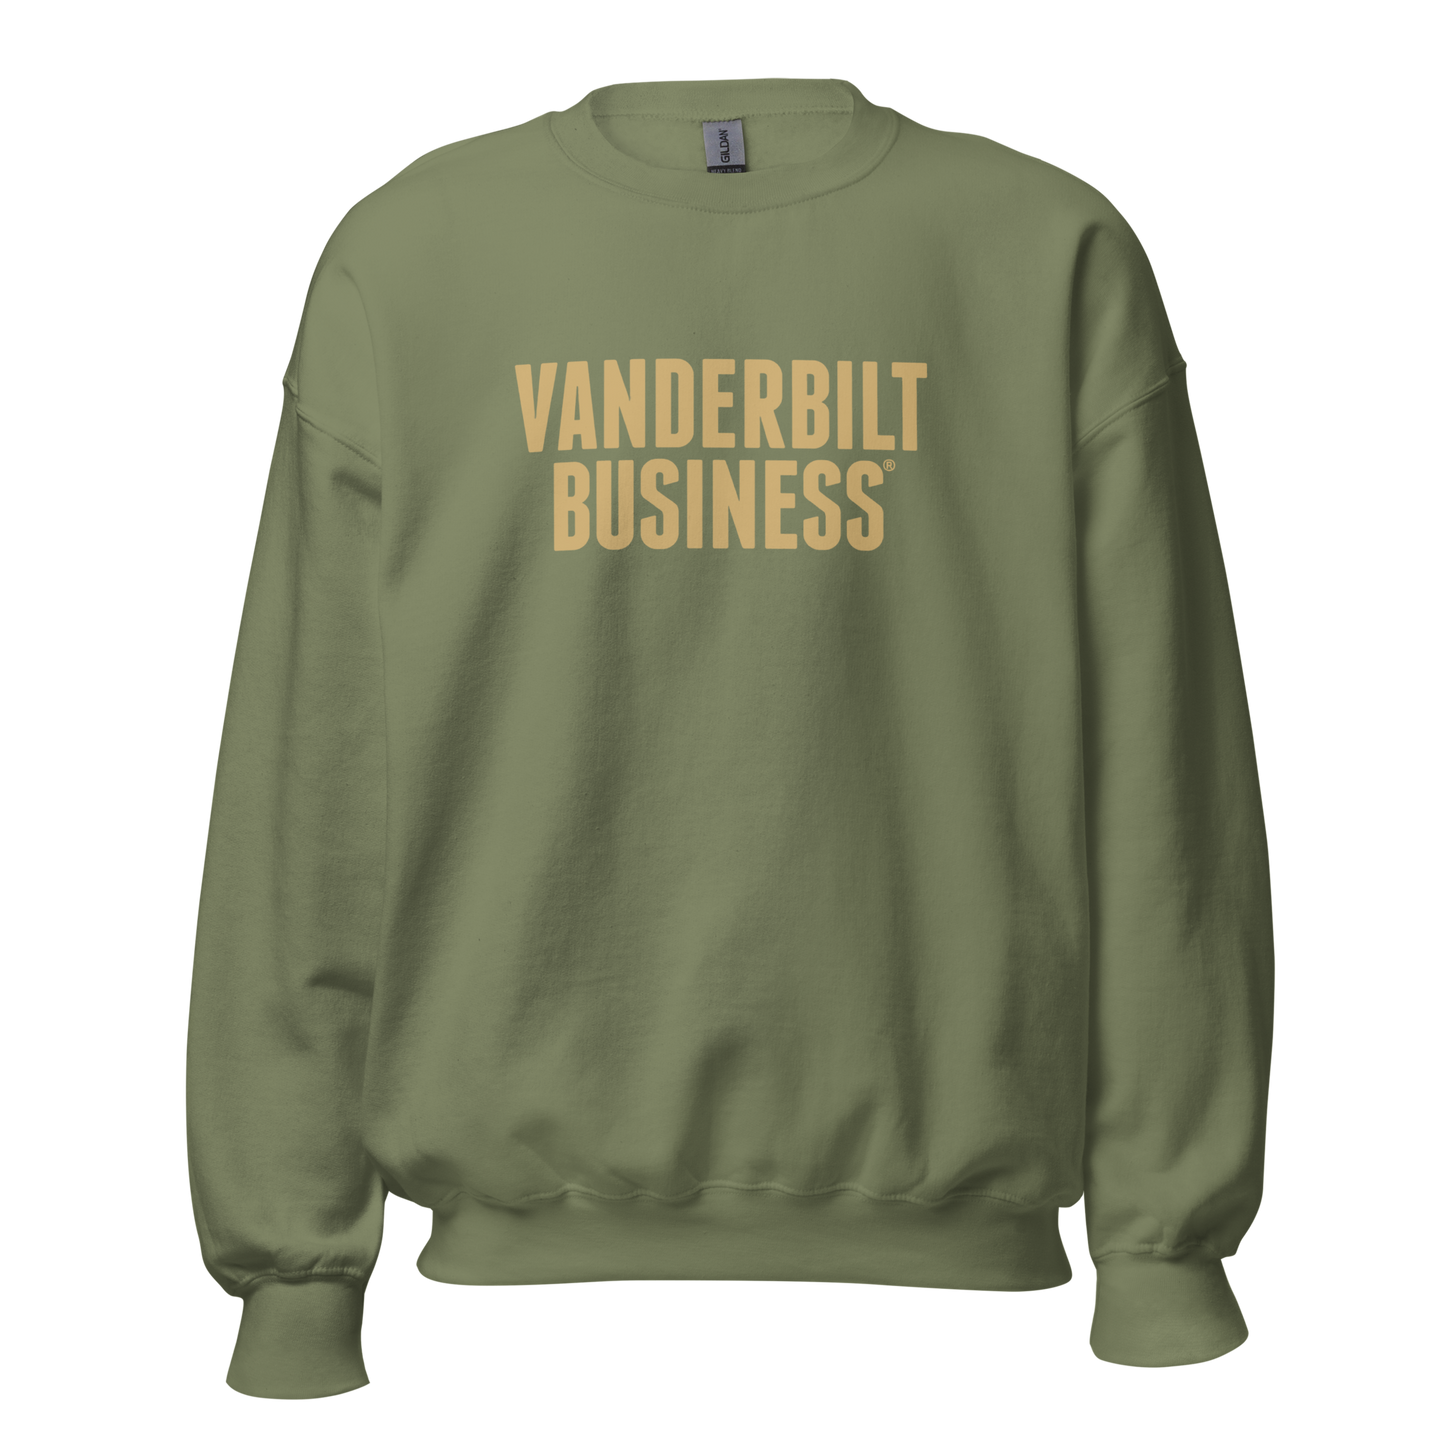 Vanderbilt Business Unisex Sweatshirt